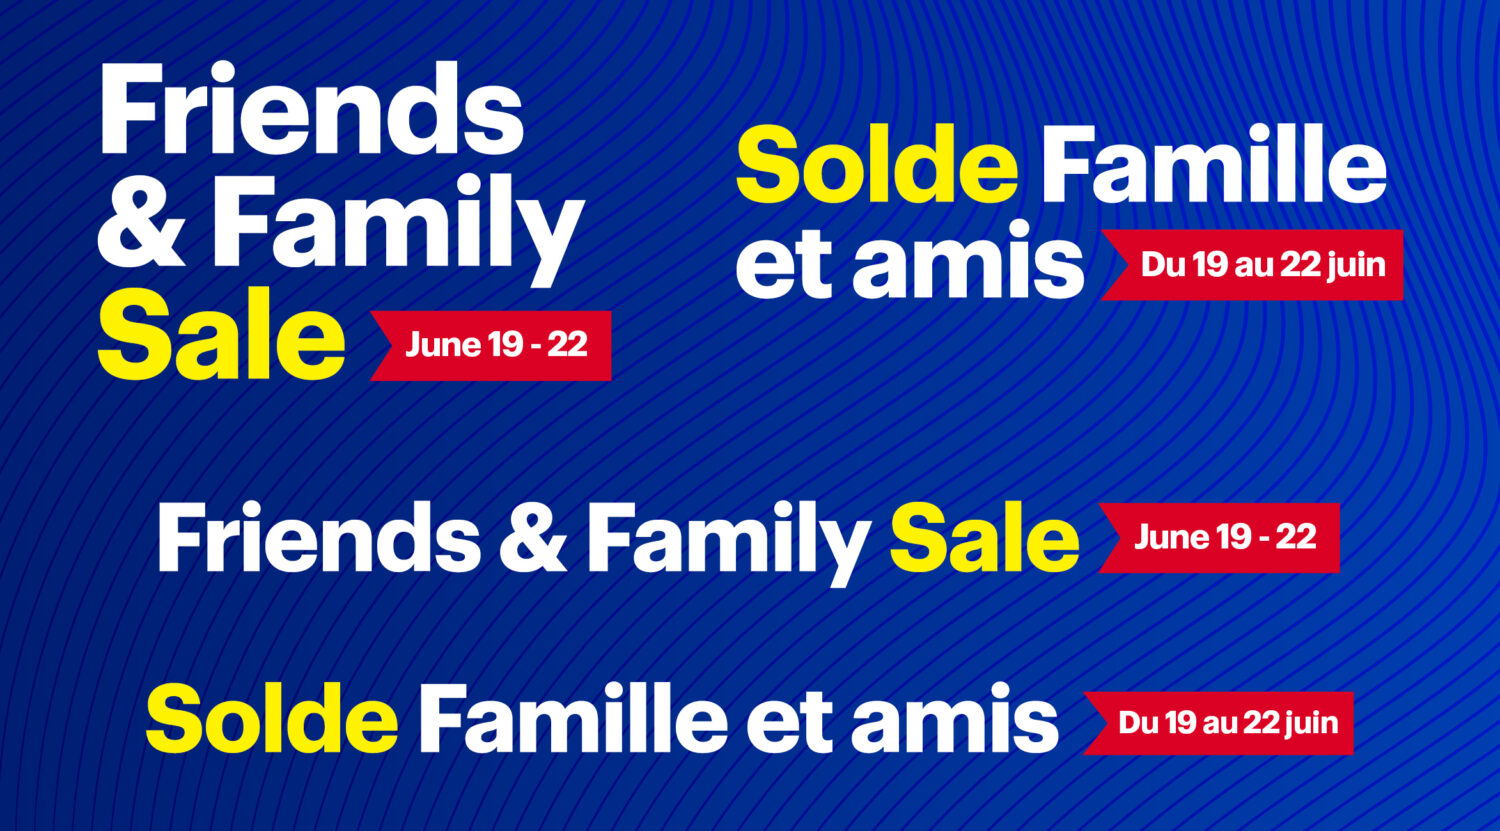 Best Buy Friends & Family Sale event Annie Sheng